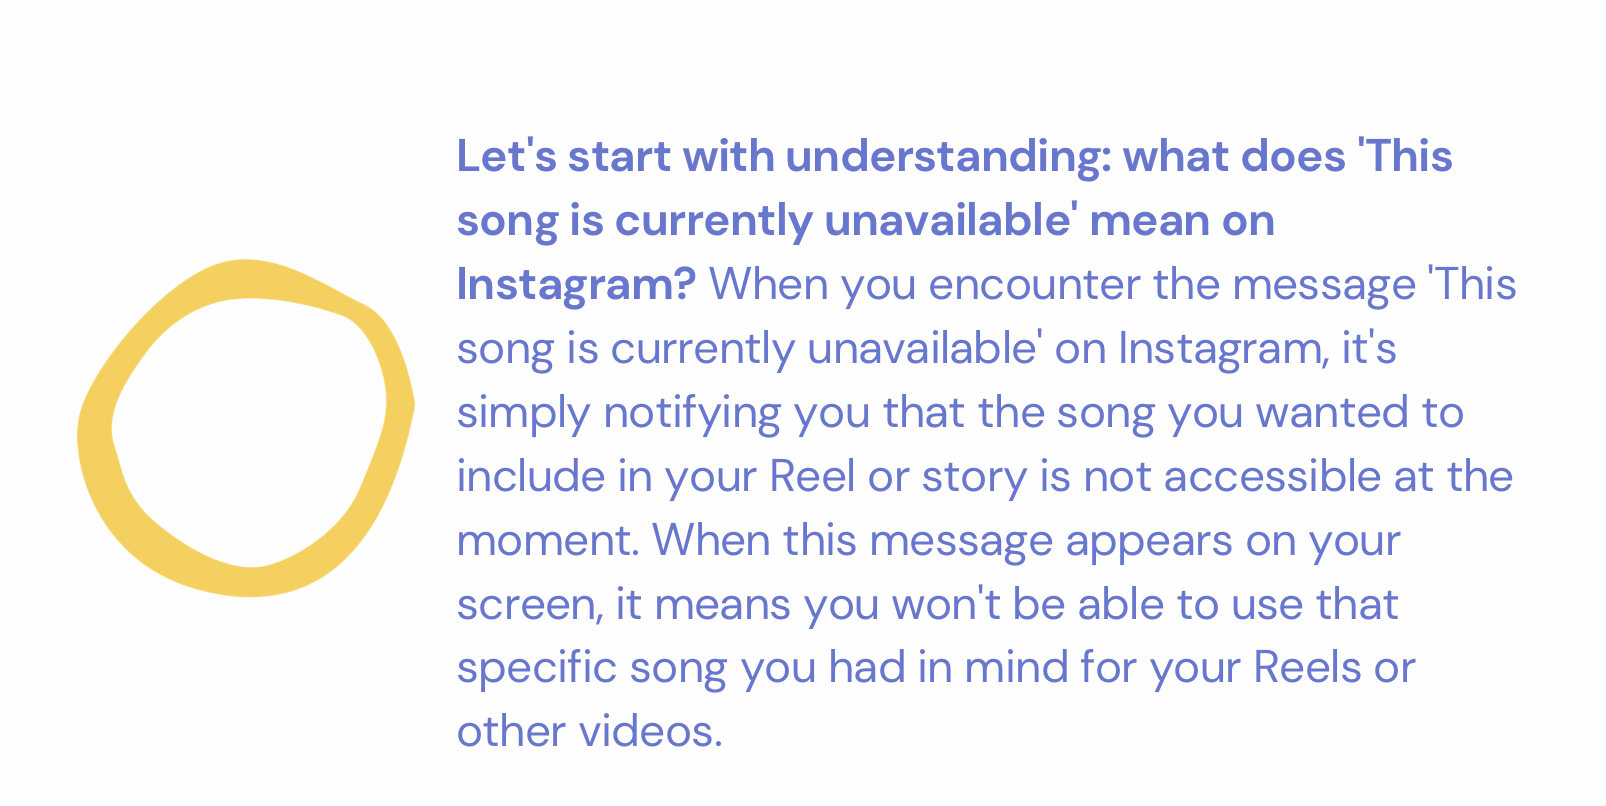 Audio Unavailable on Instagram - how to fix it, tutorial